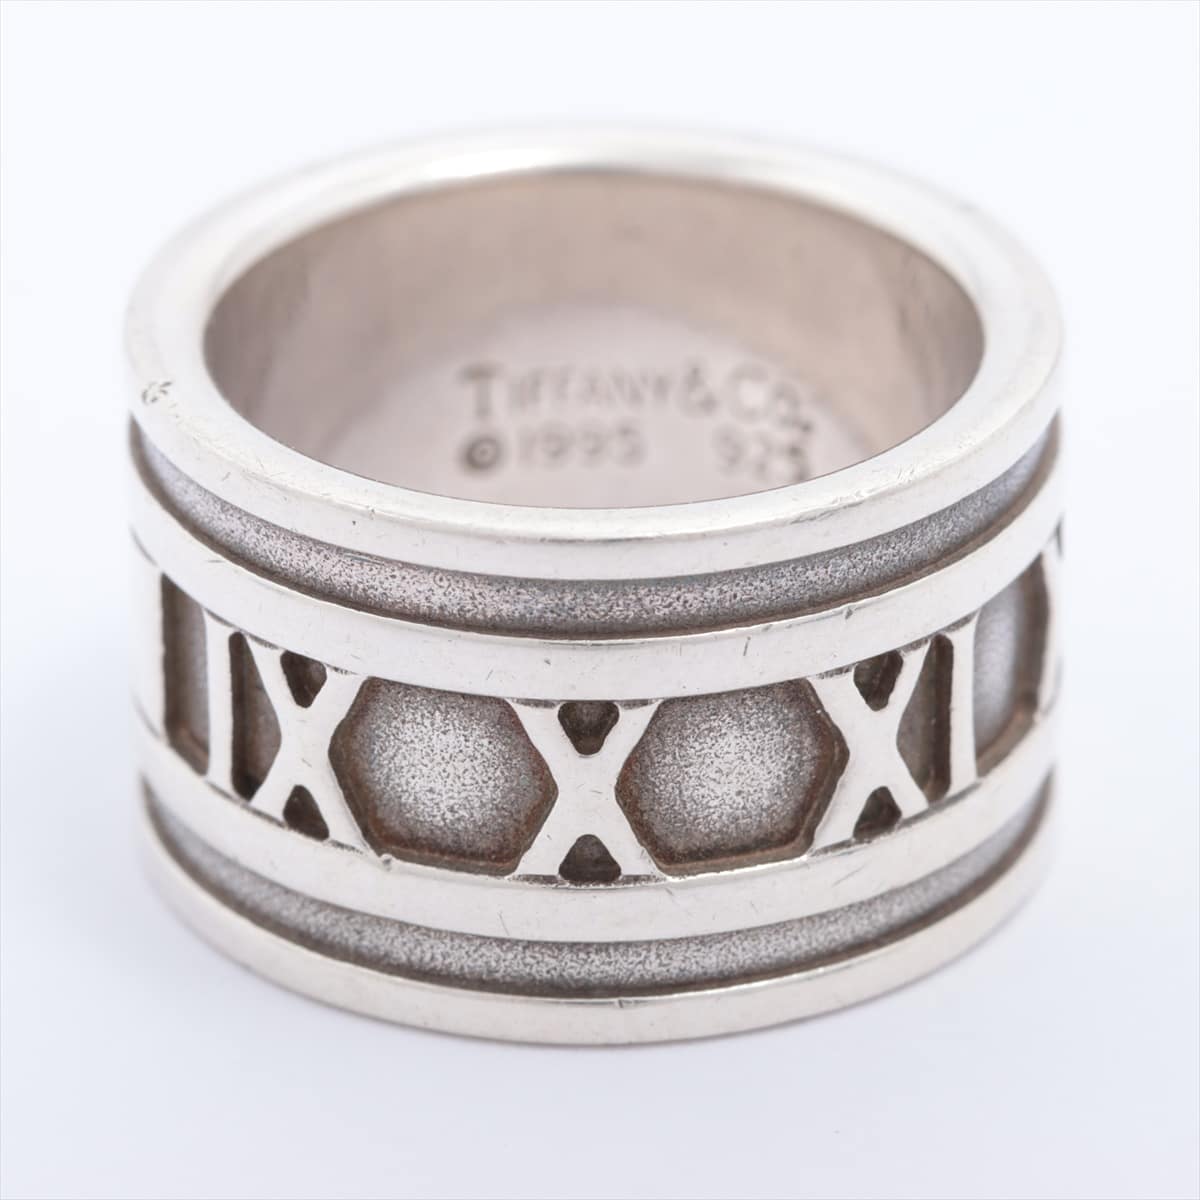 Tiffany Atlas rings 925 10.6g Silver